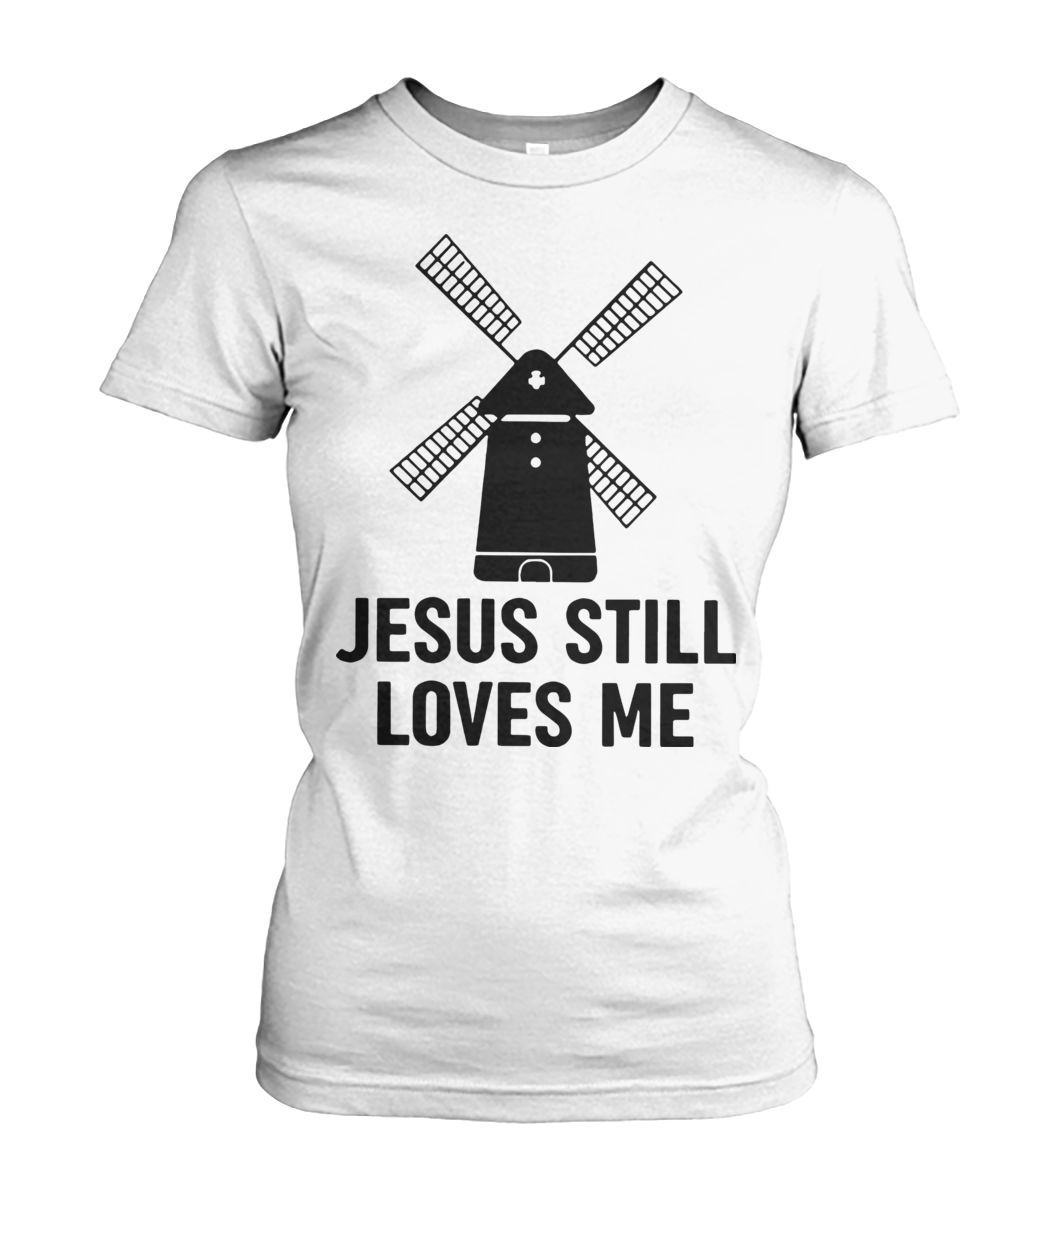 Jesus still loves me windmill women's crew tee